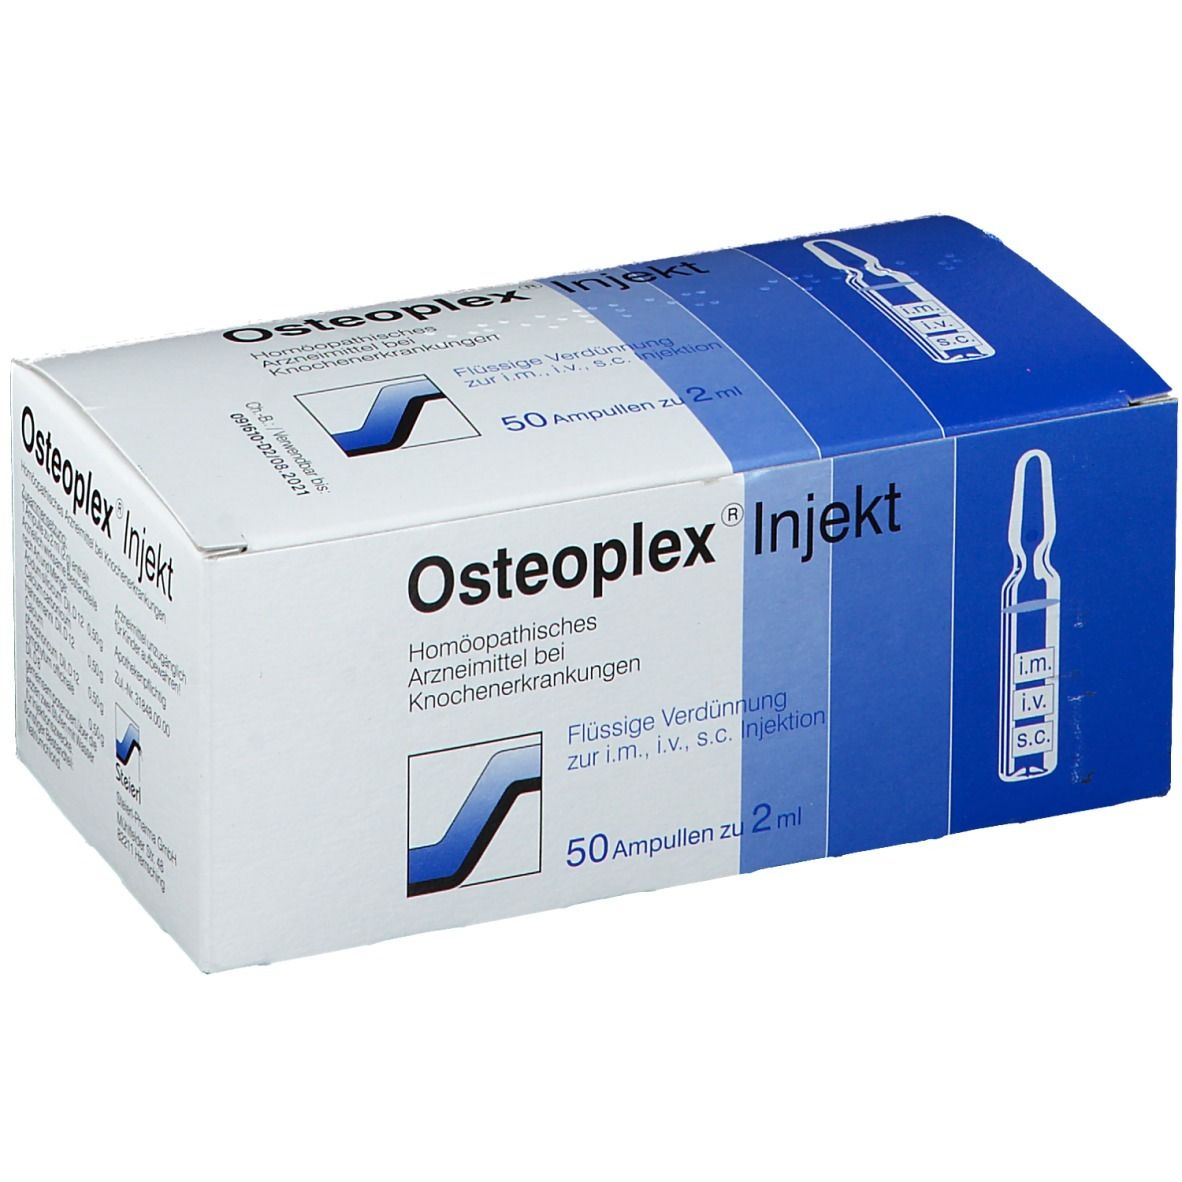 Osteoplex® Injekt Ampullen